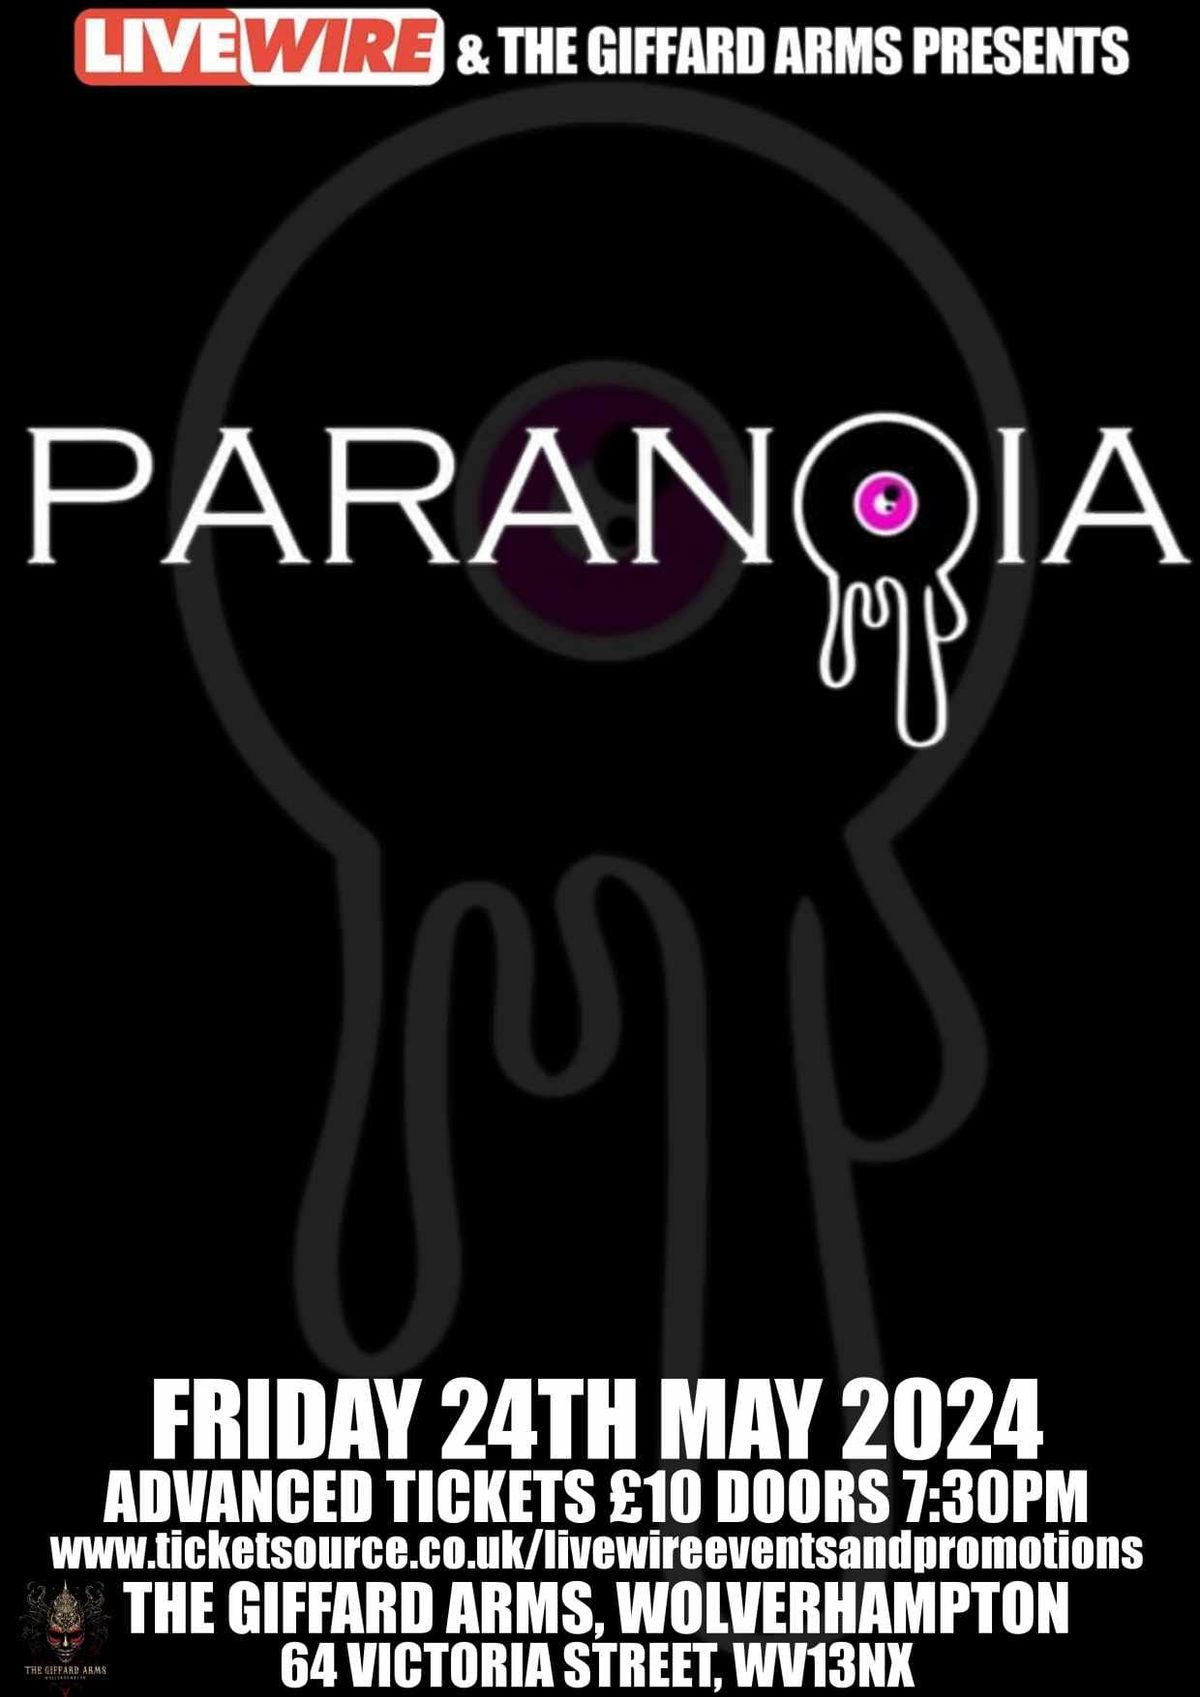 LiveWire presents Paranoia